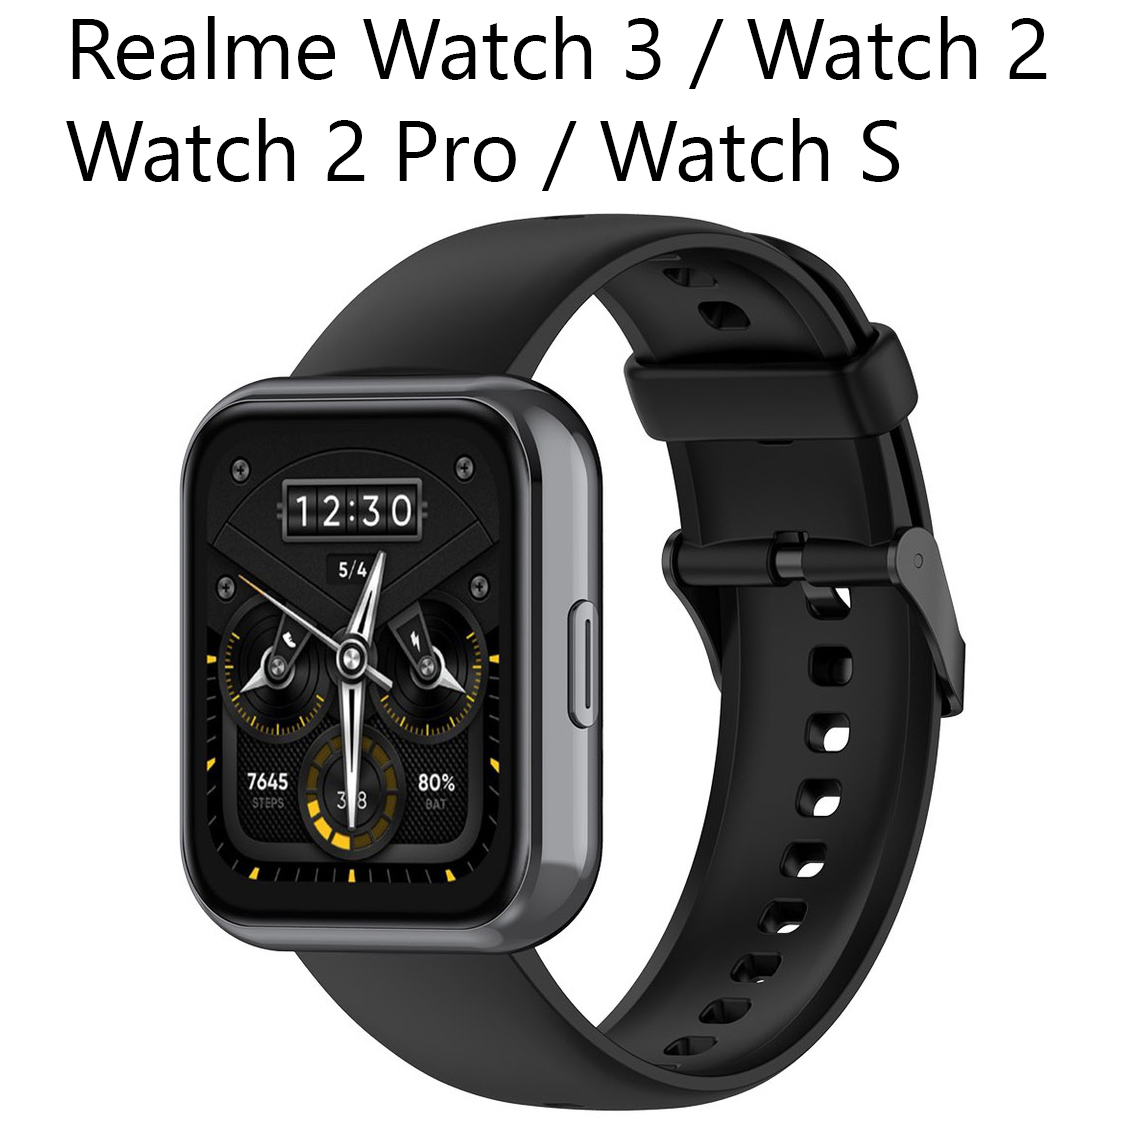 Dây Đeo Cho Đồng Hồ Realme Watch 3 / Watch 2 / Watch 2 Pro / Watch S Rộng 22mm